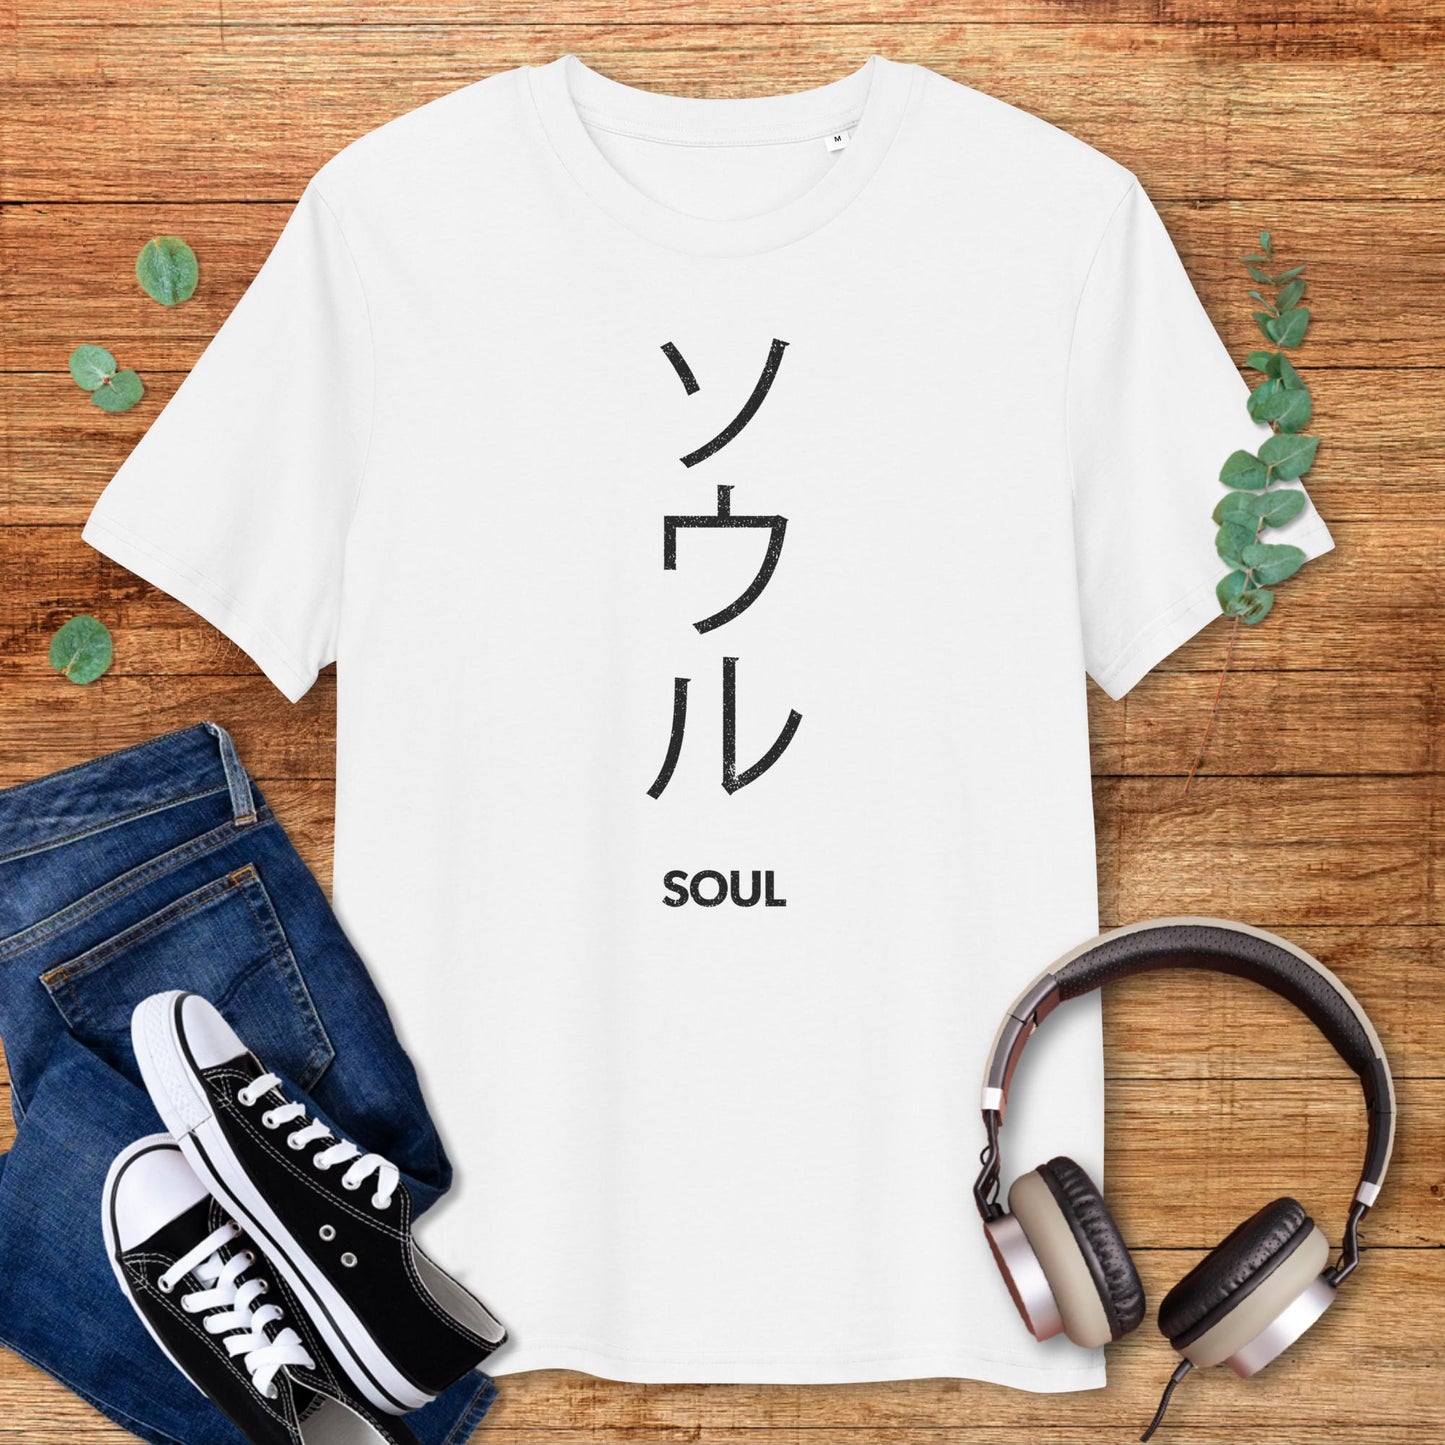 Soul in Japanese